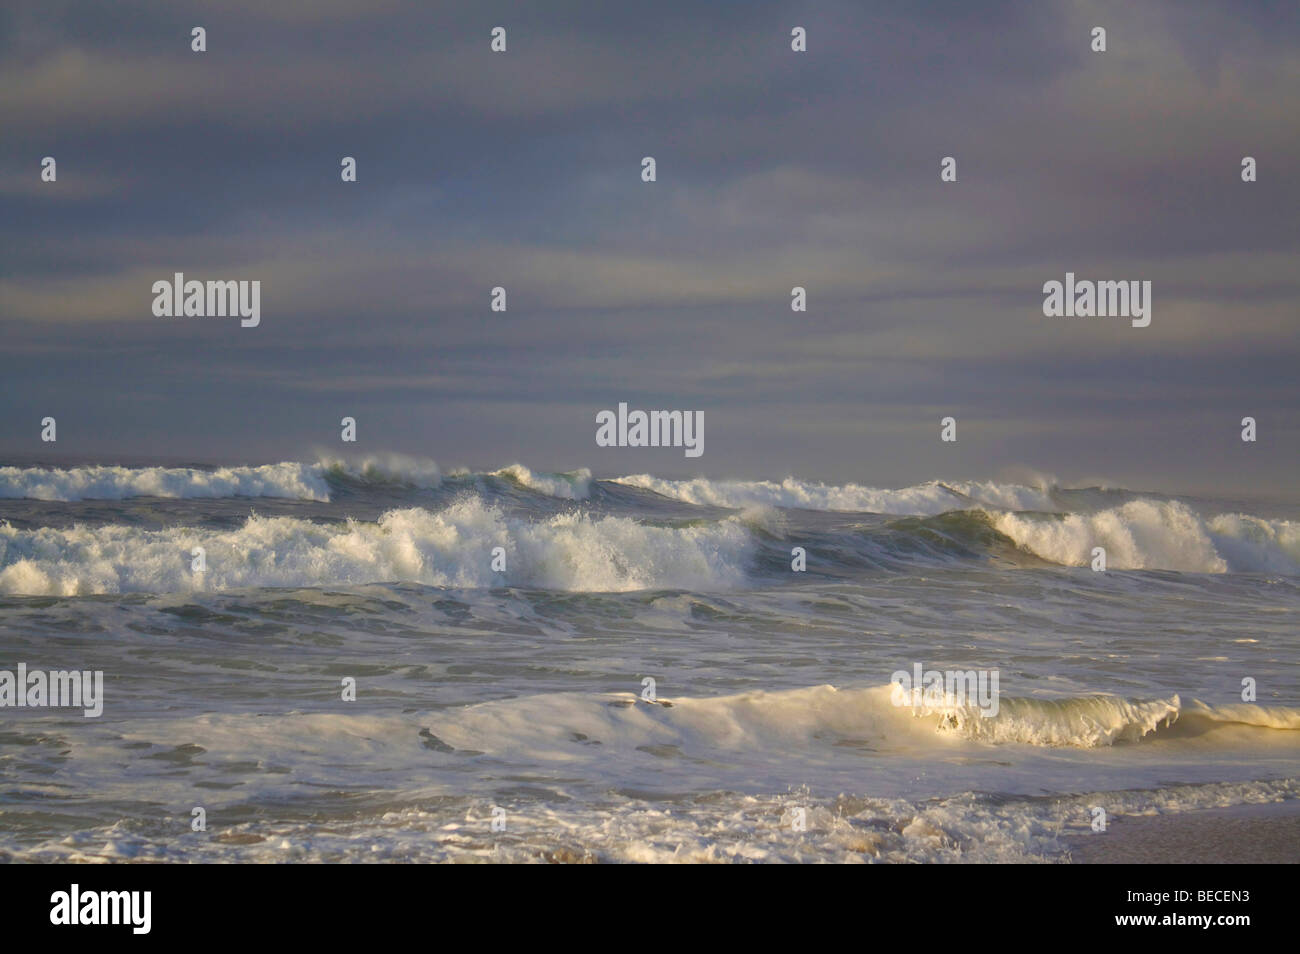 Ocean waves breaking on the beach Stock Photo